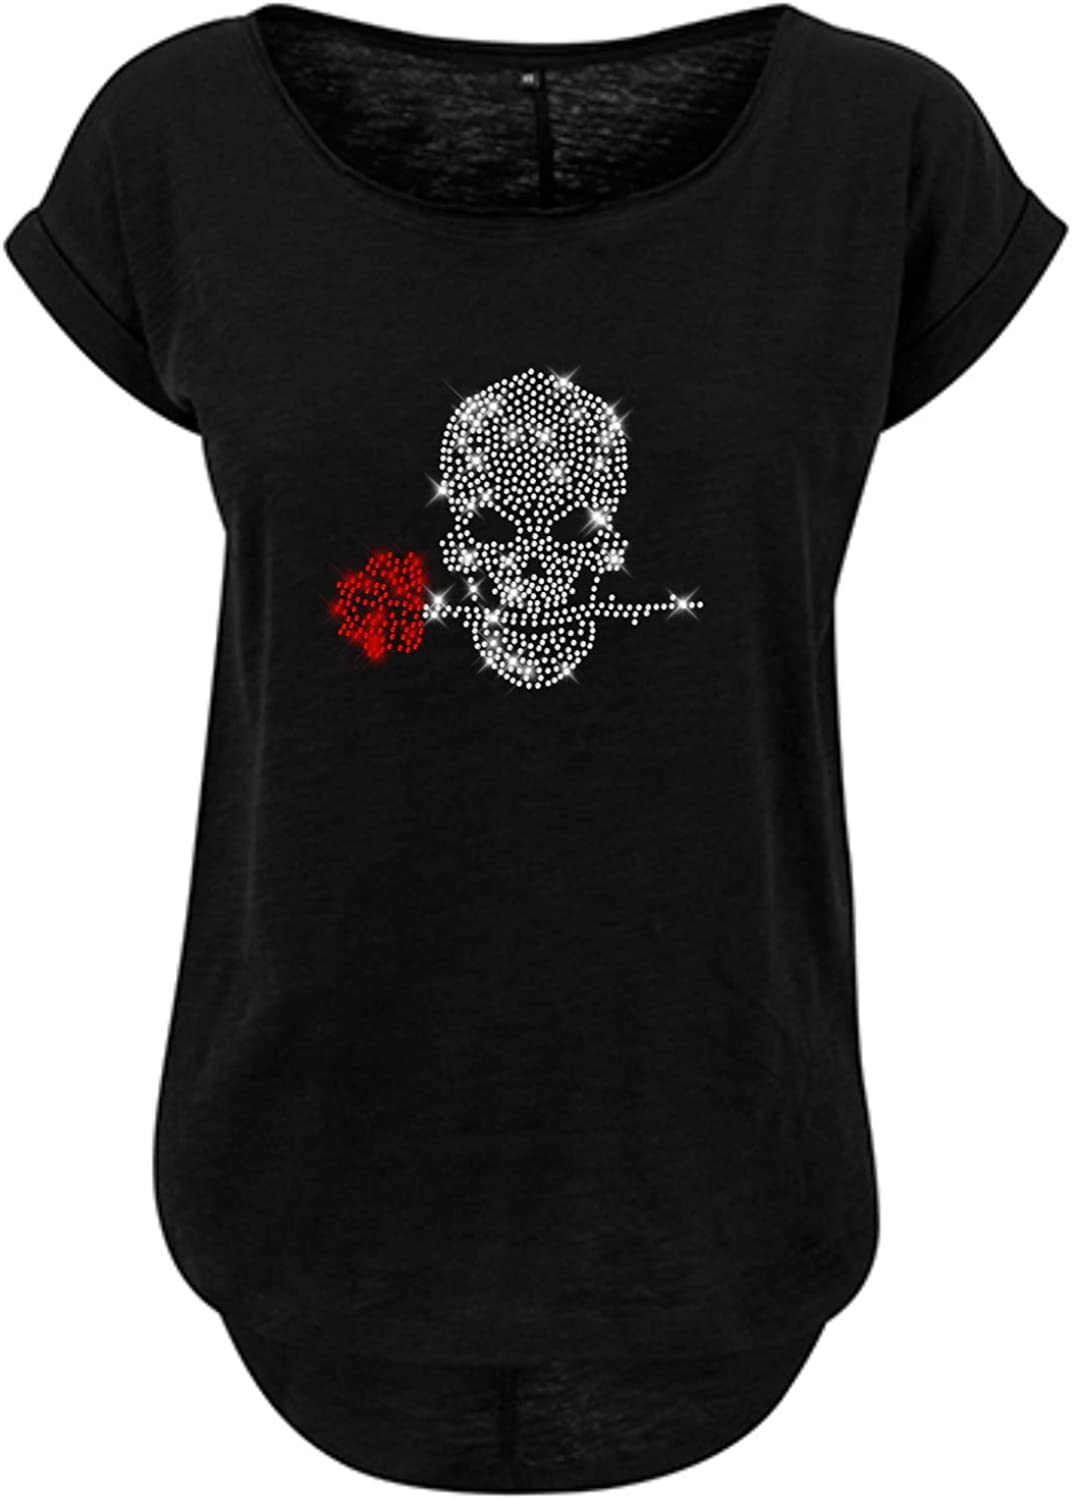 Blingeling® Totenkopf Damen Strass T-Shirt mit roter Rose